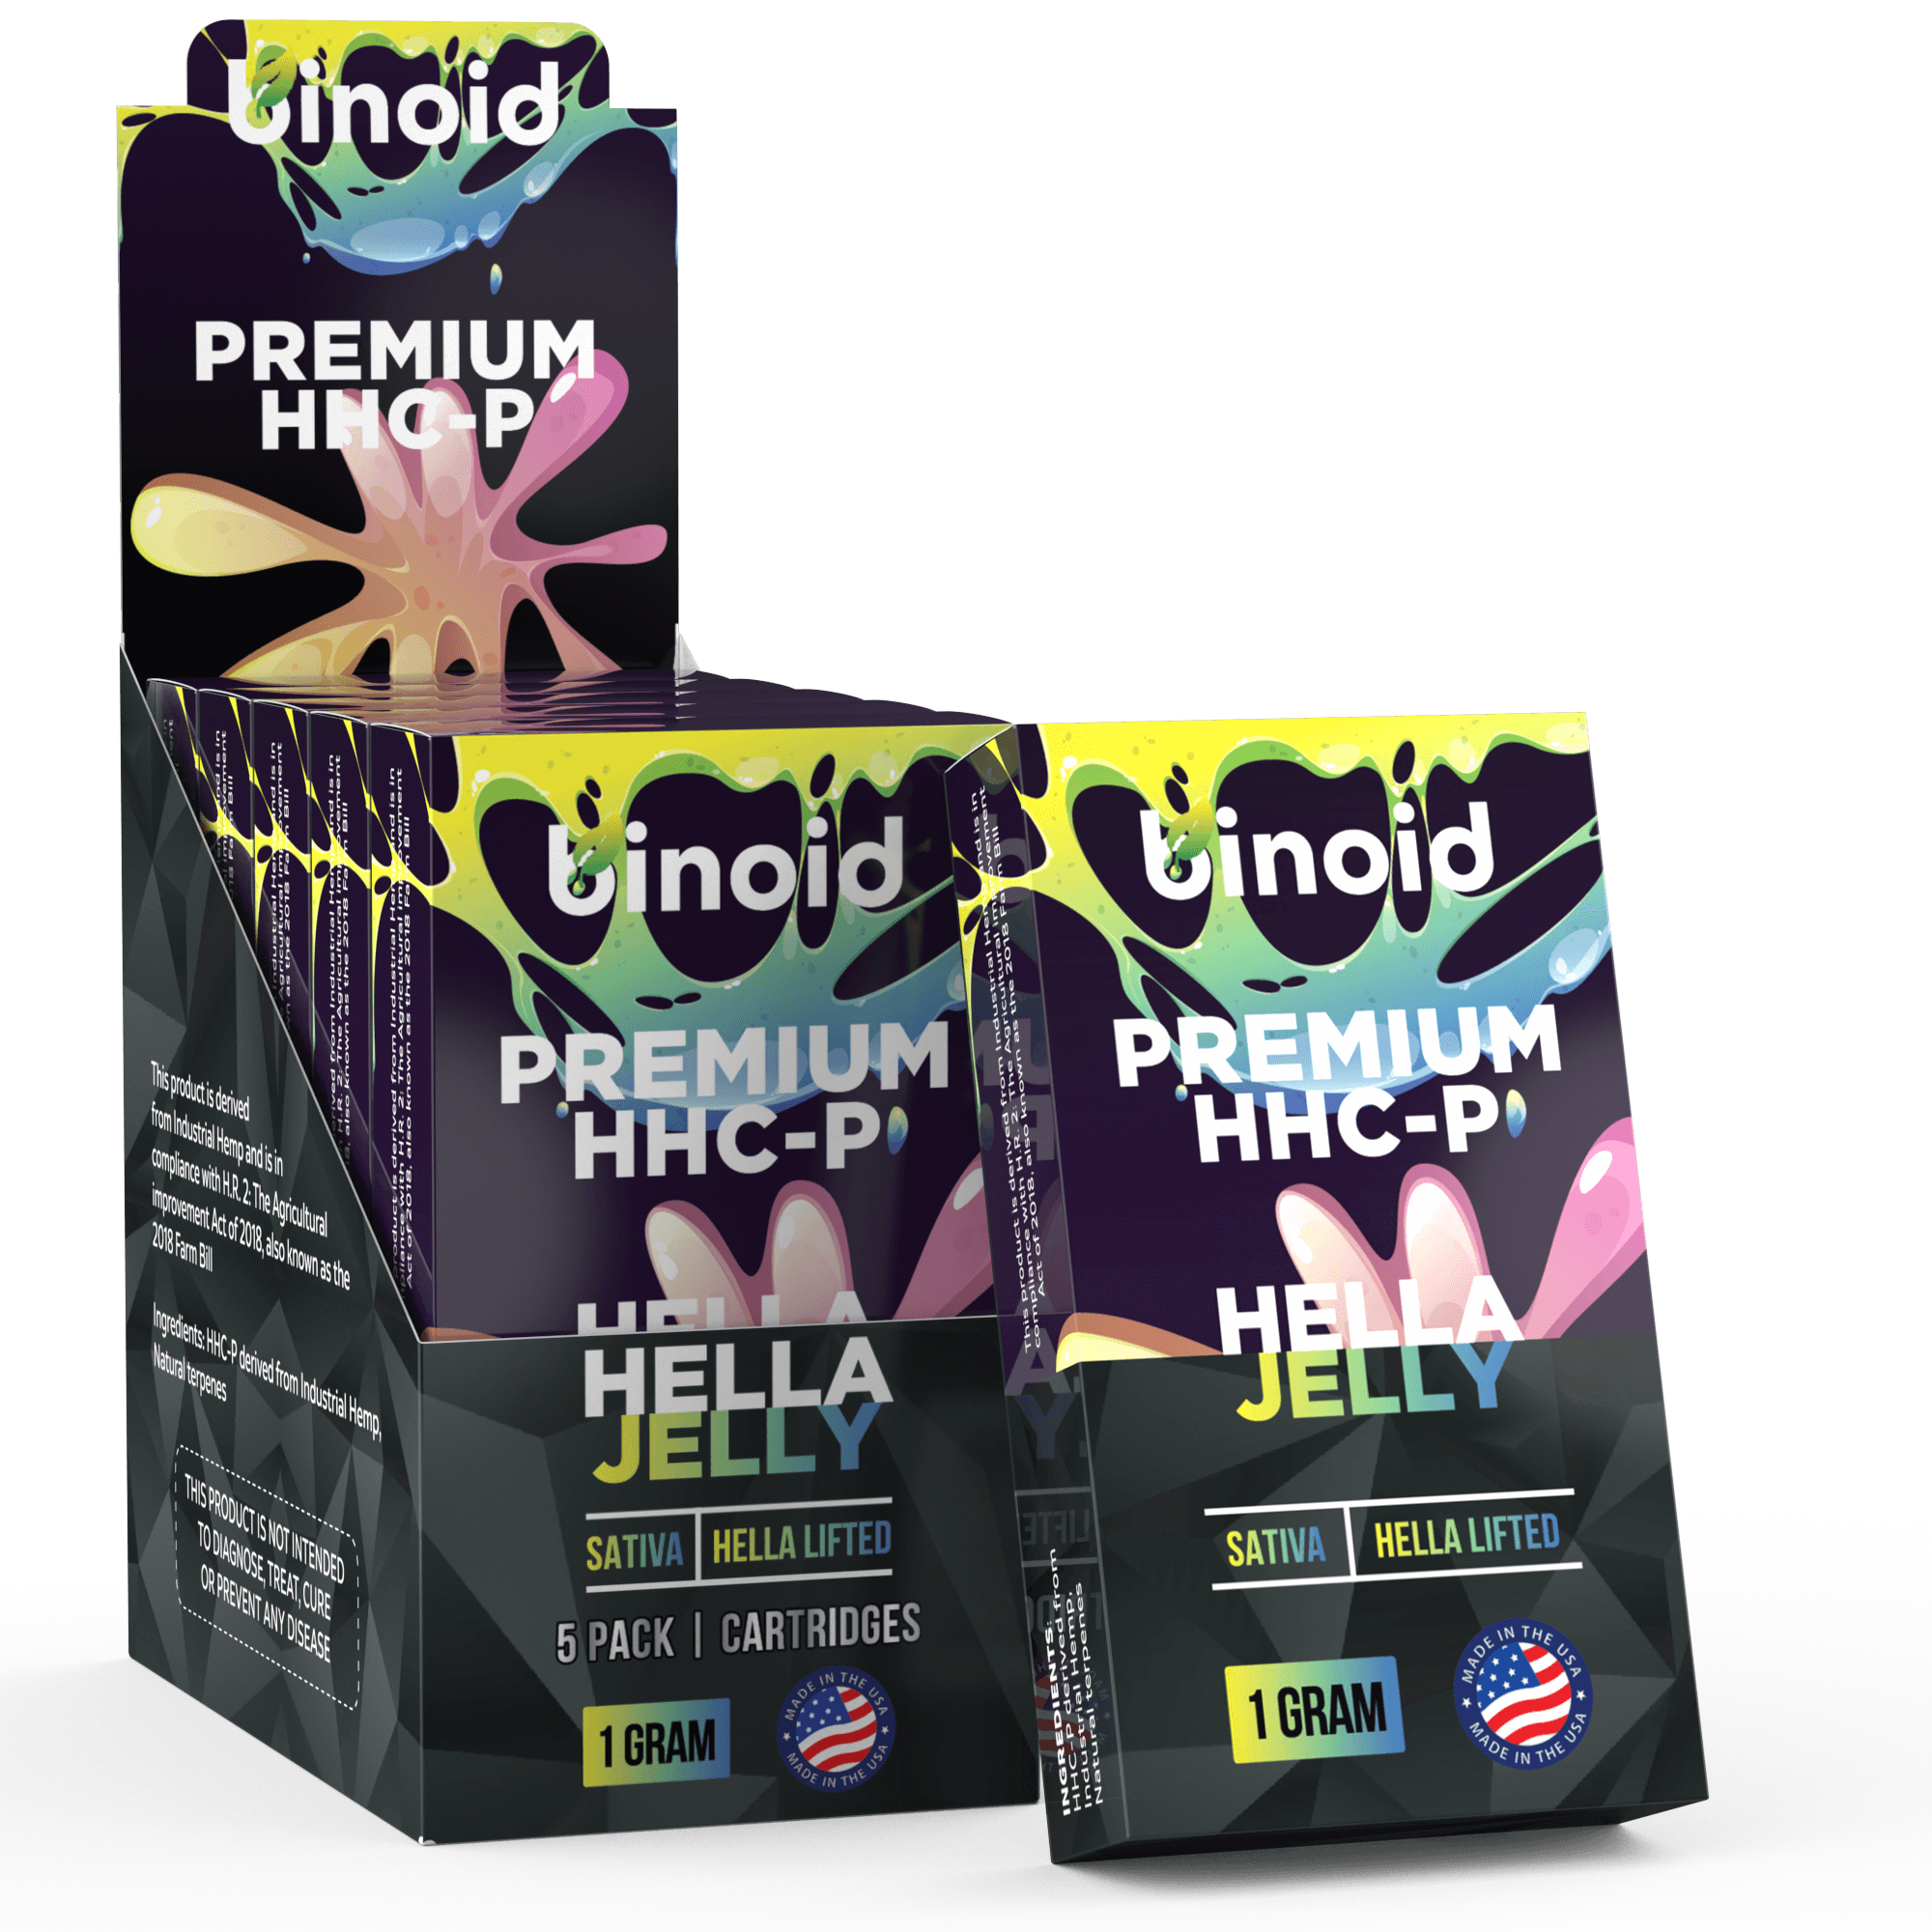 Binoid HHC-P Vape Cartridge - Hella Jelly Best Price